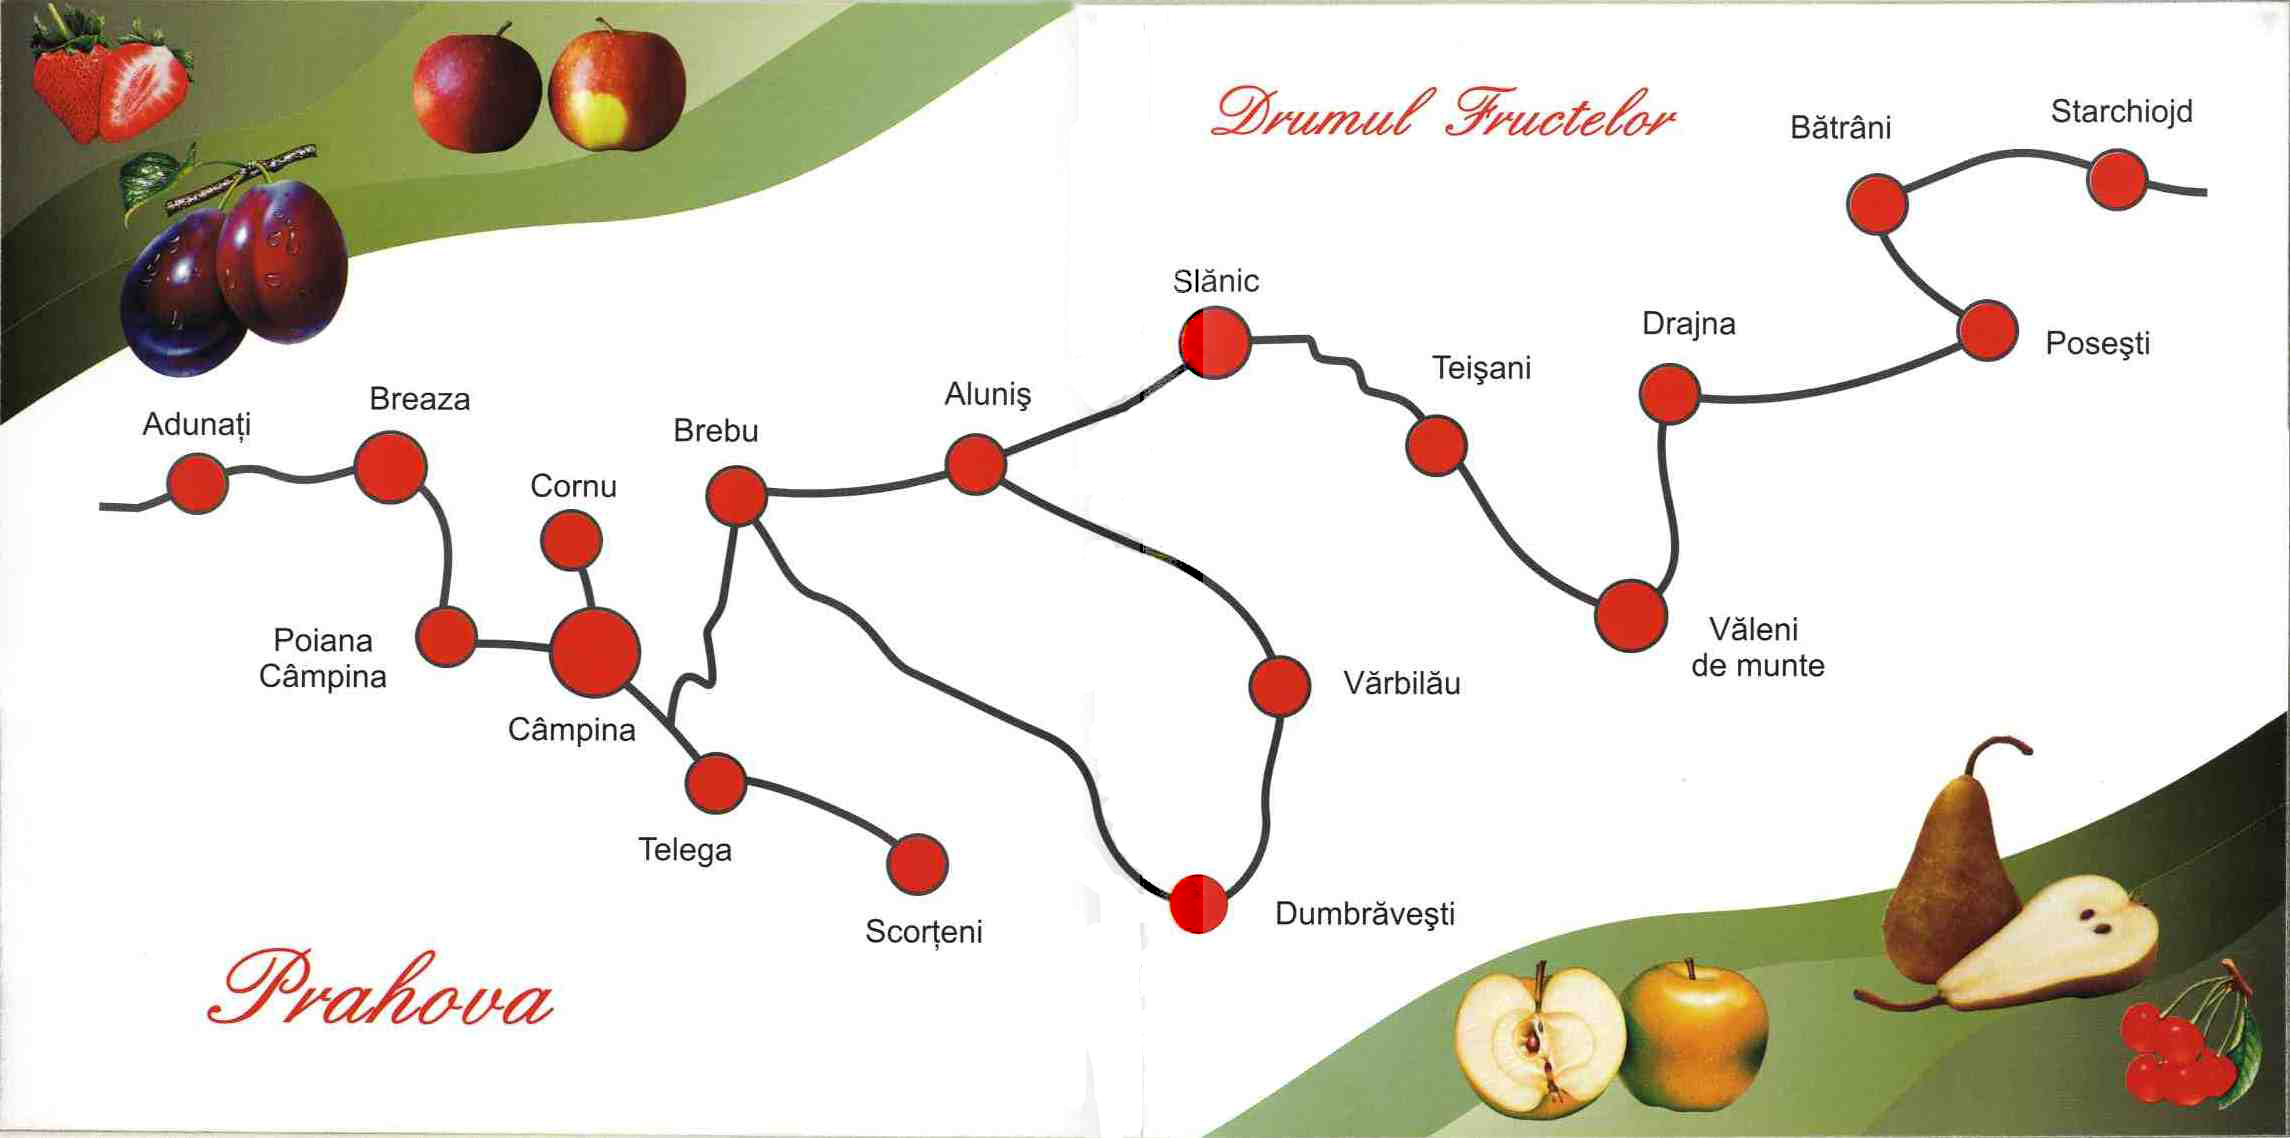 Drumul Fructelor